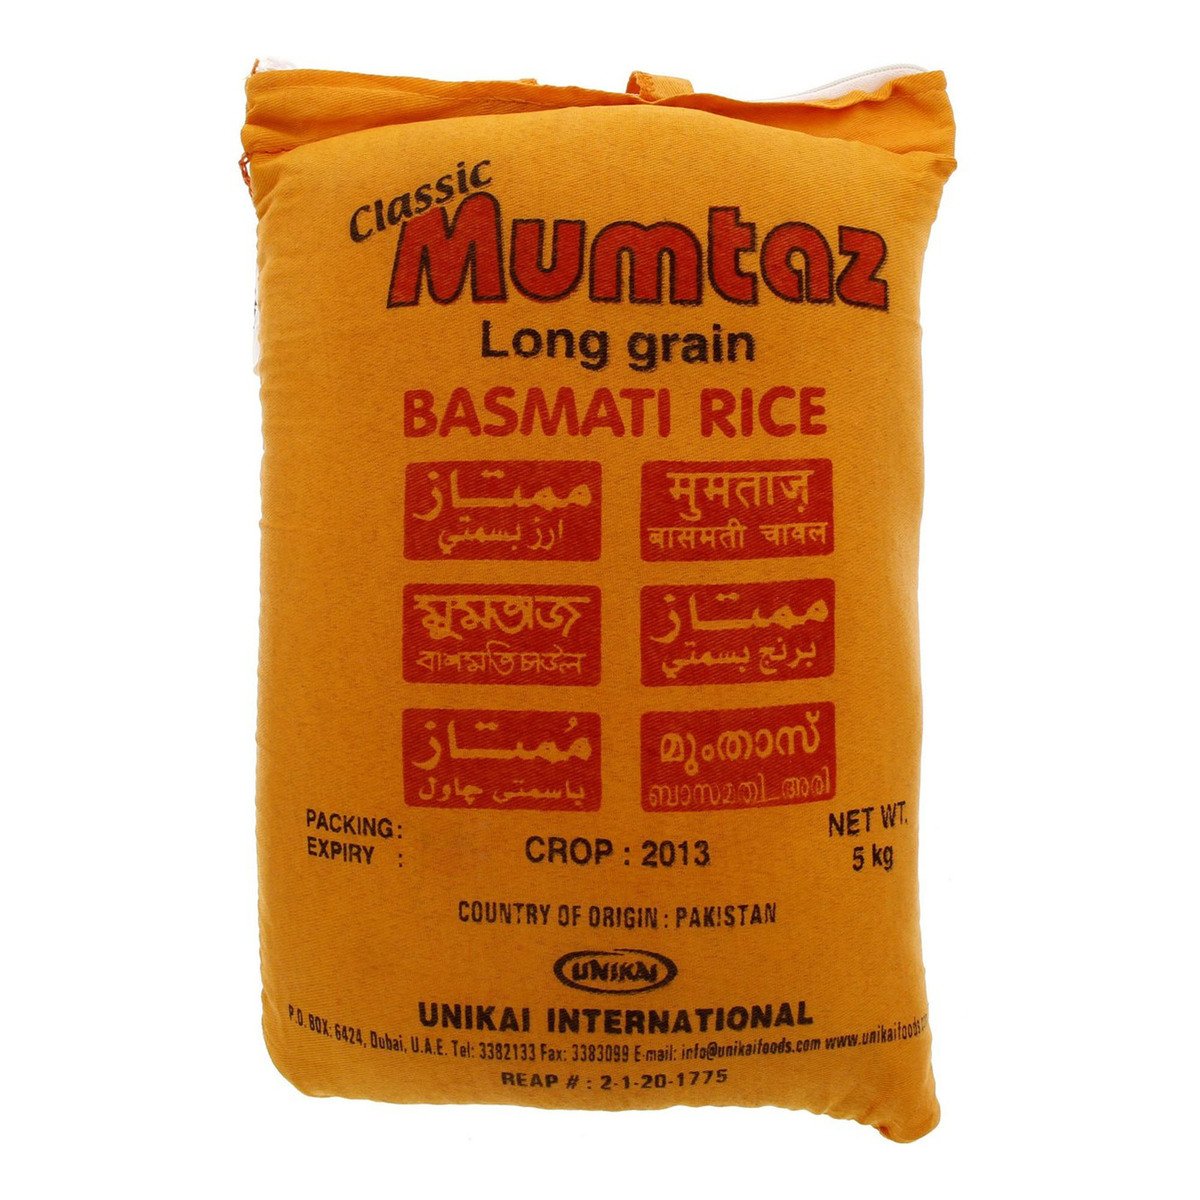 Mumtaz Classic Basmati Rice 5kg